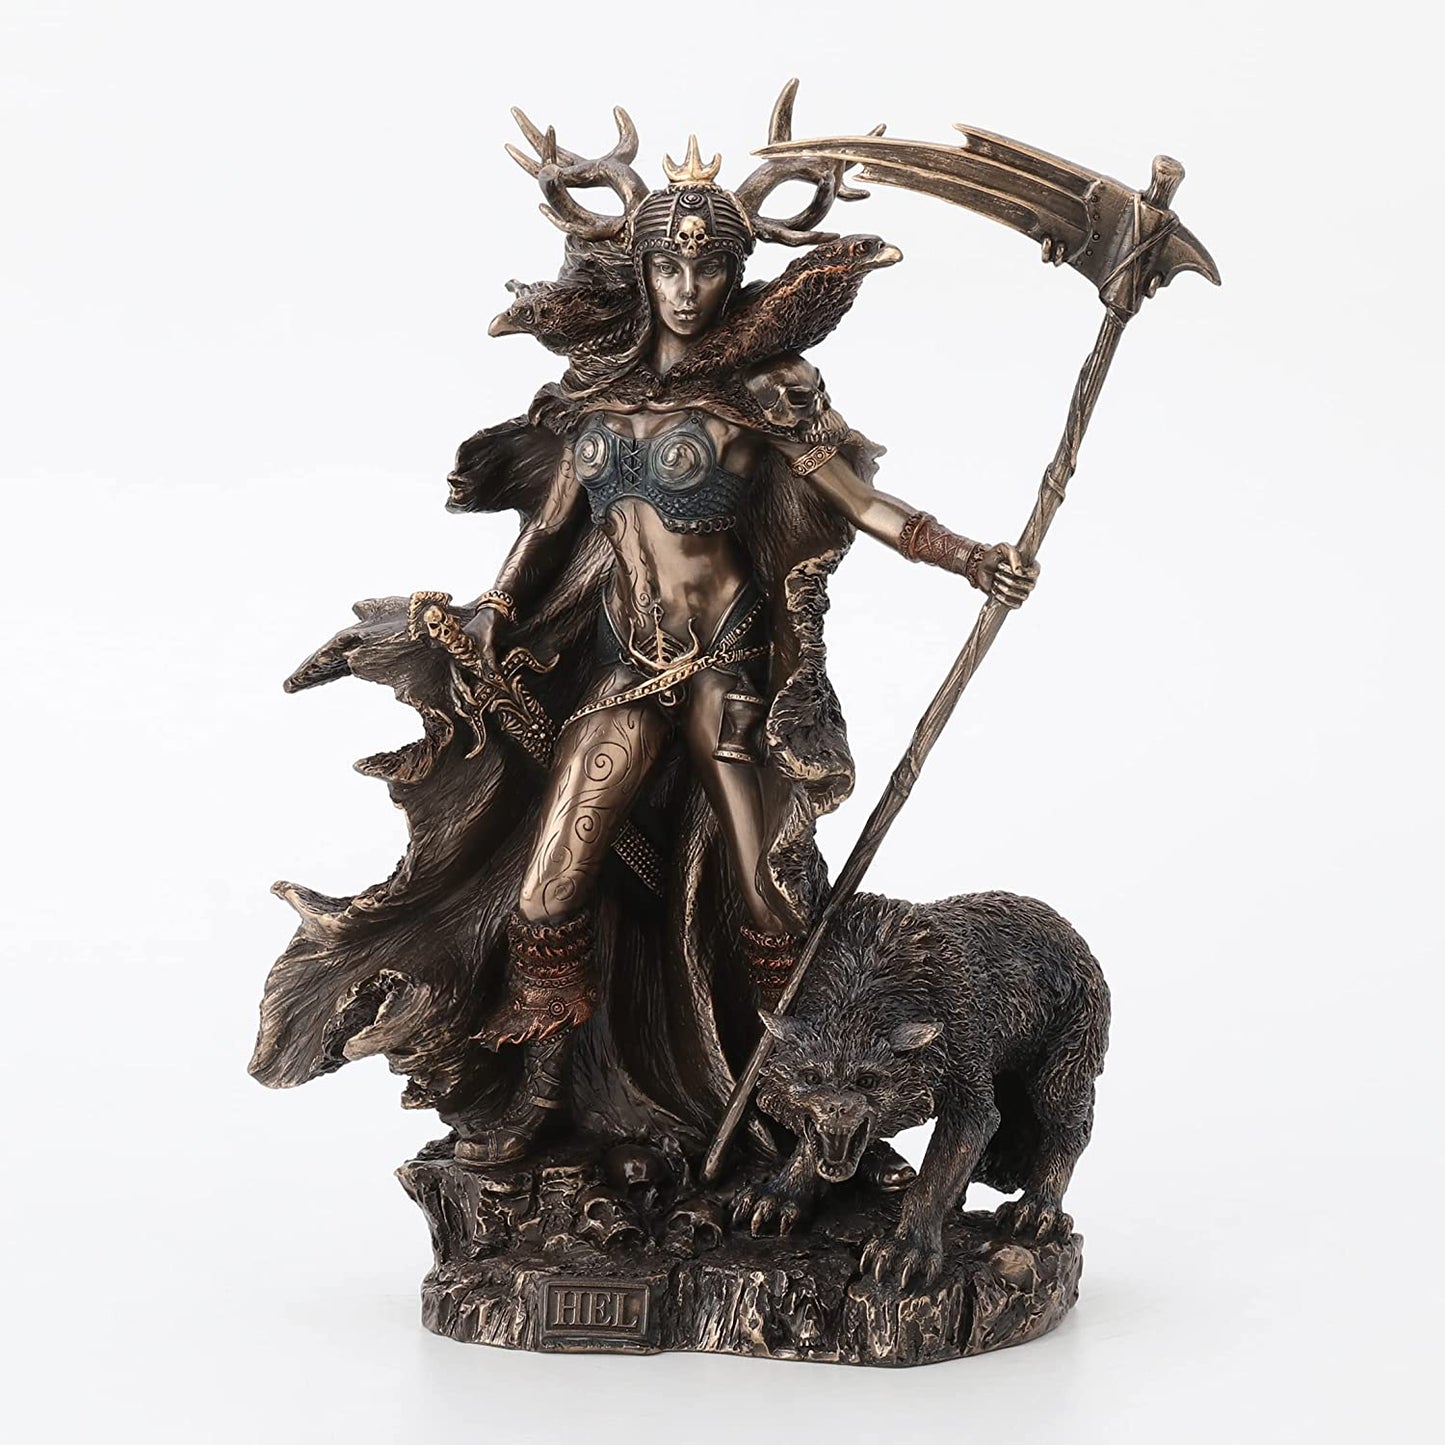 Hel Goddess Of The Norse Underworld Statue